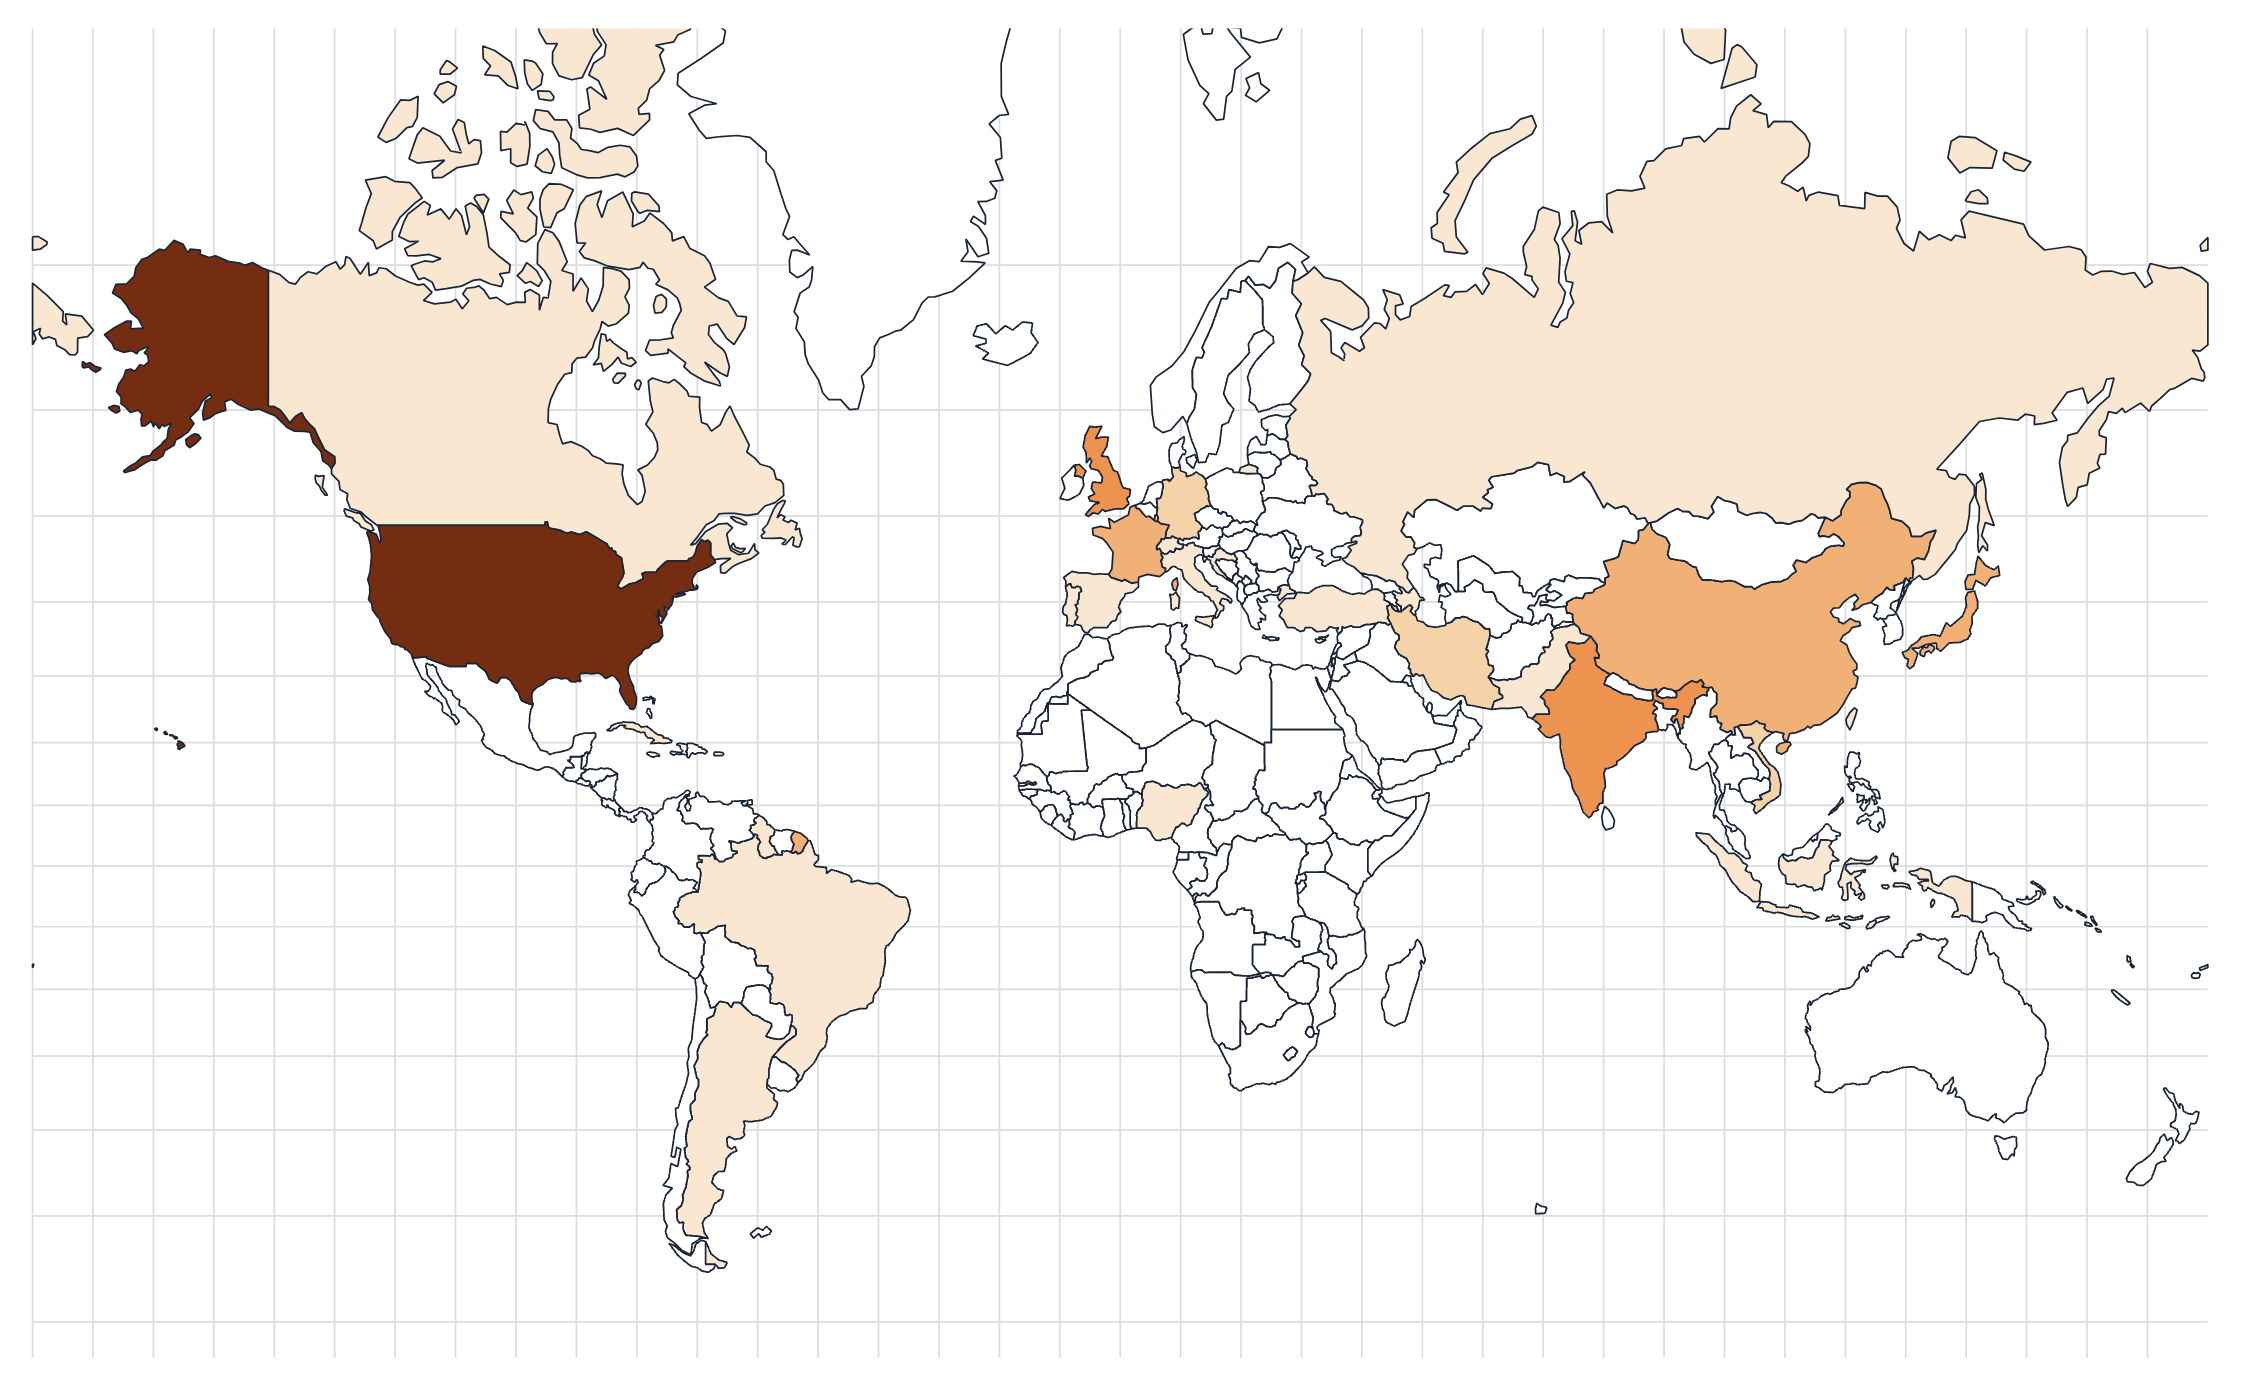 daisyUI contributors around the world